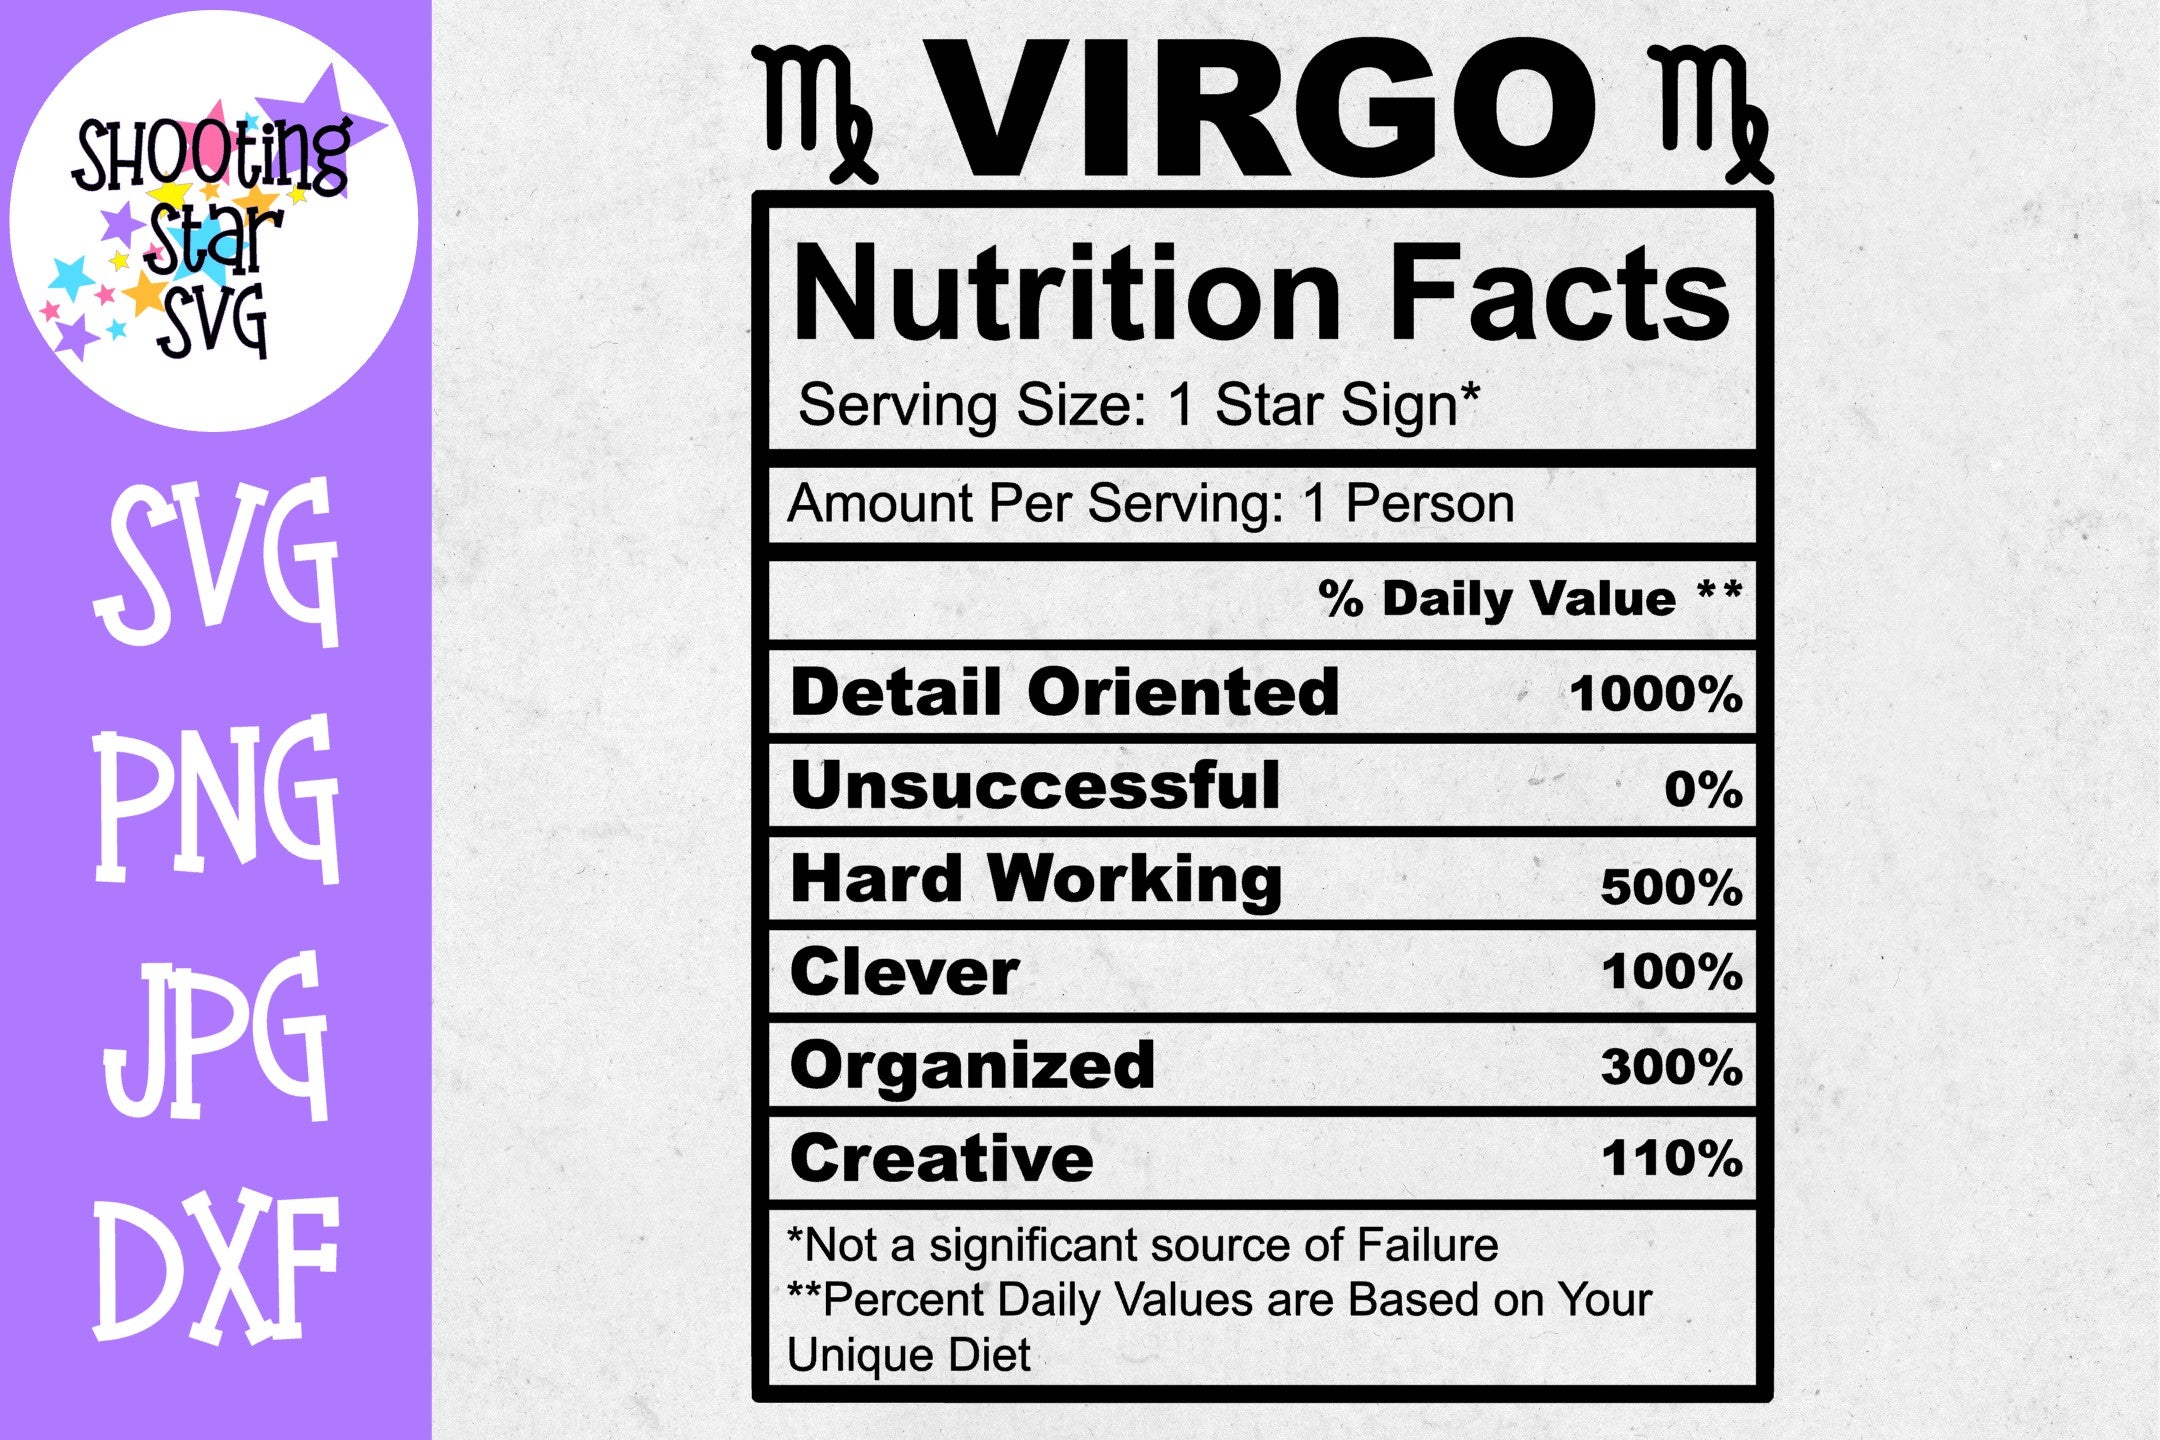 Virgo Nutrition Facts